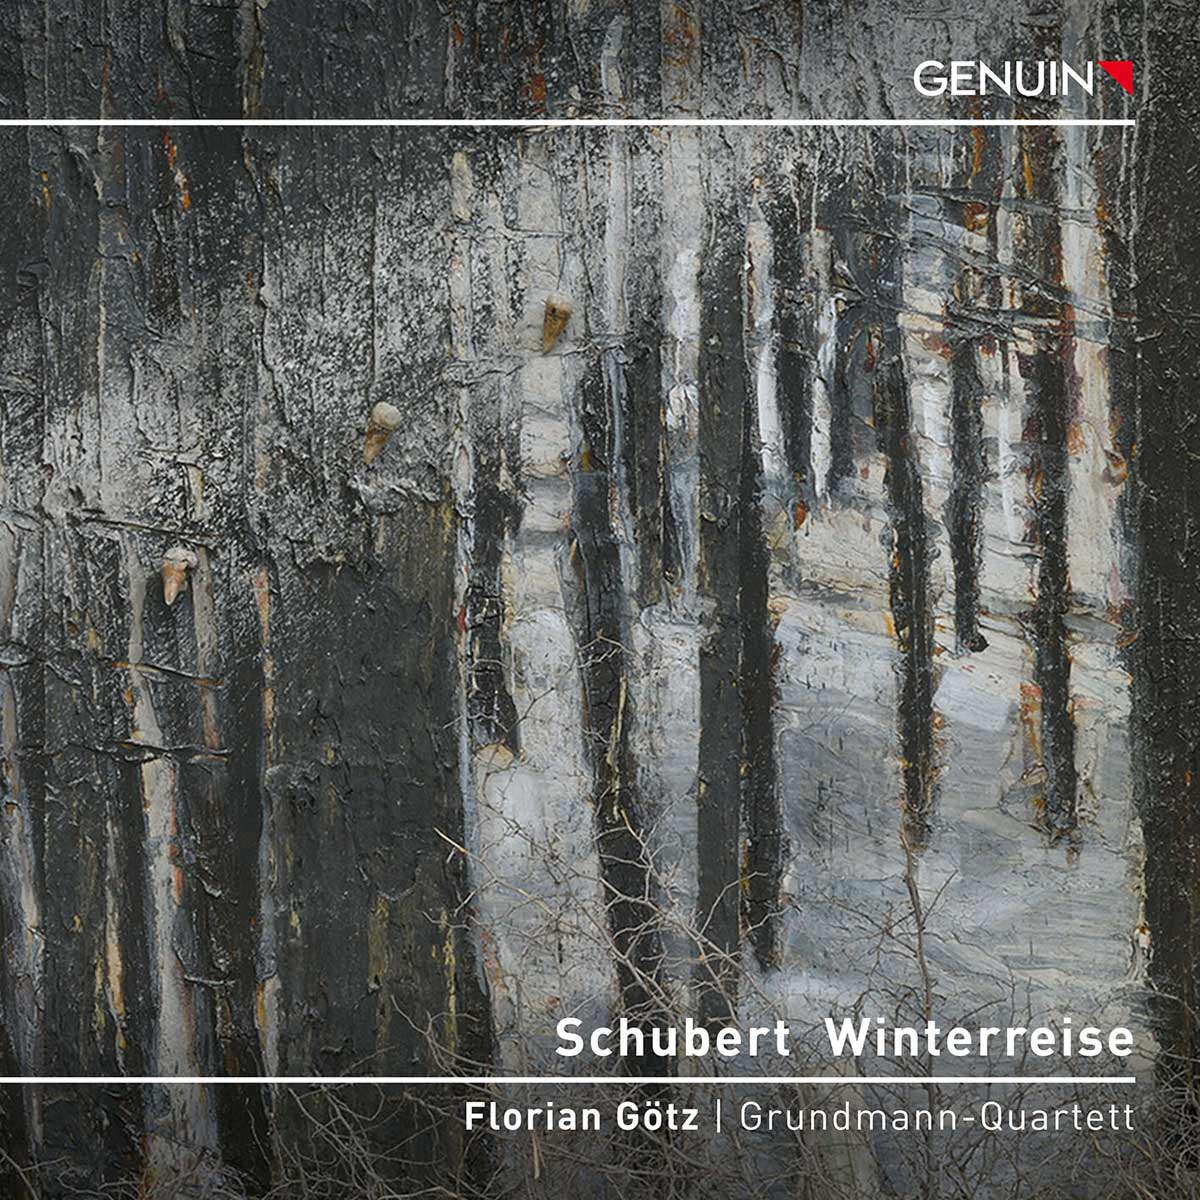 CD album cover 'Schubert Winterreise' (GEN 23819) with Florian Götz, Grundmann-Quartett